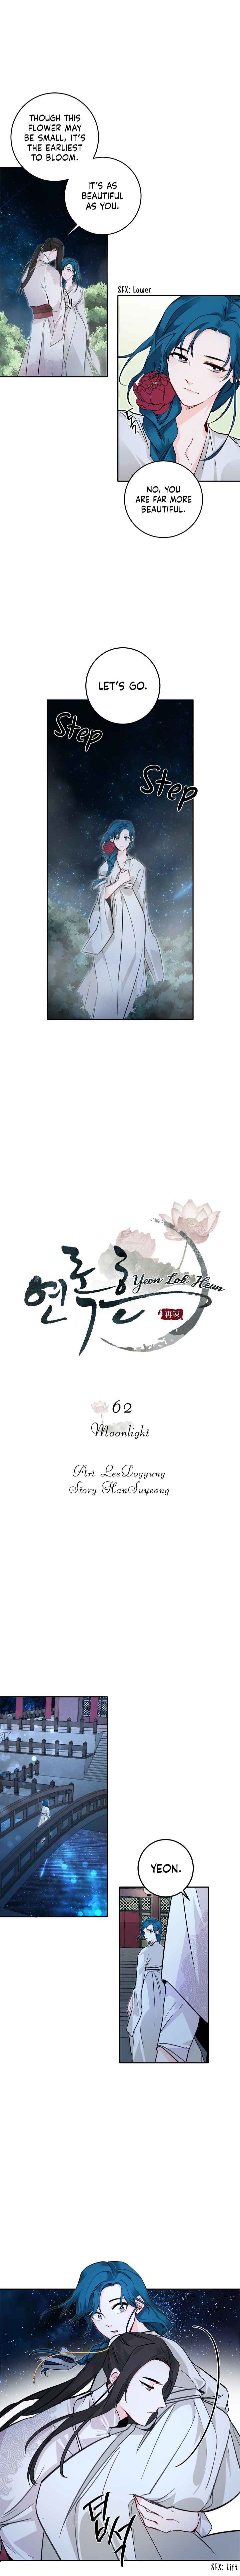 yeon-lok-heun-chap-62-1